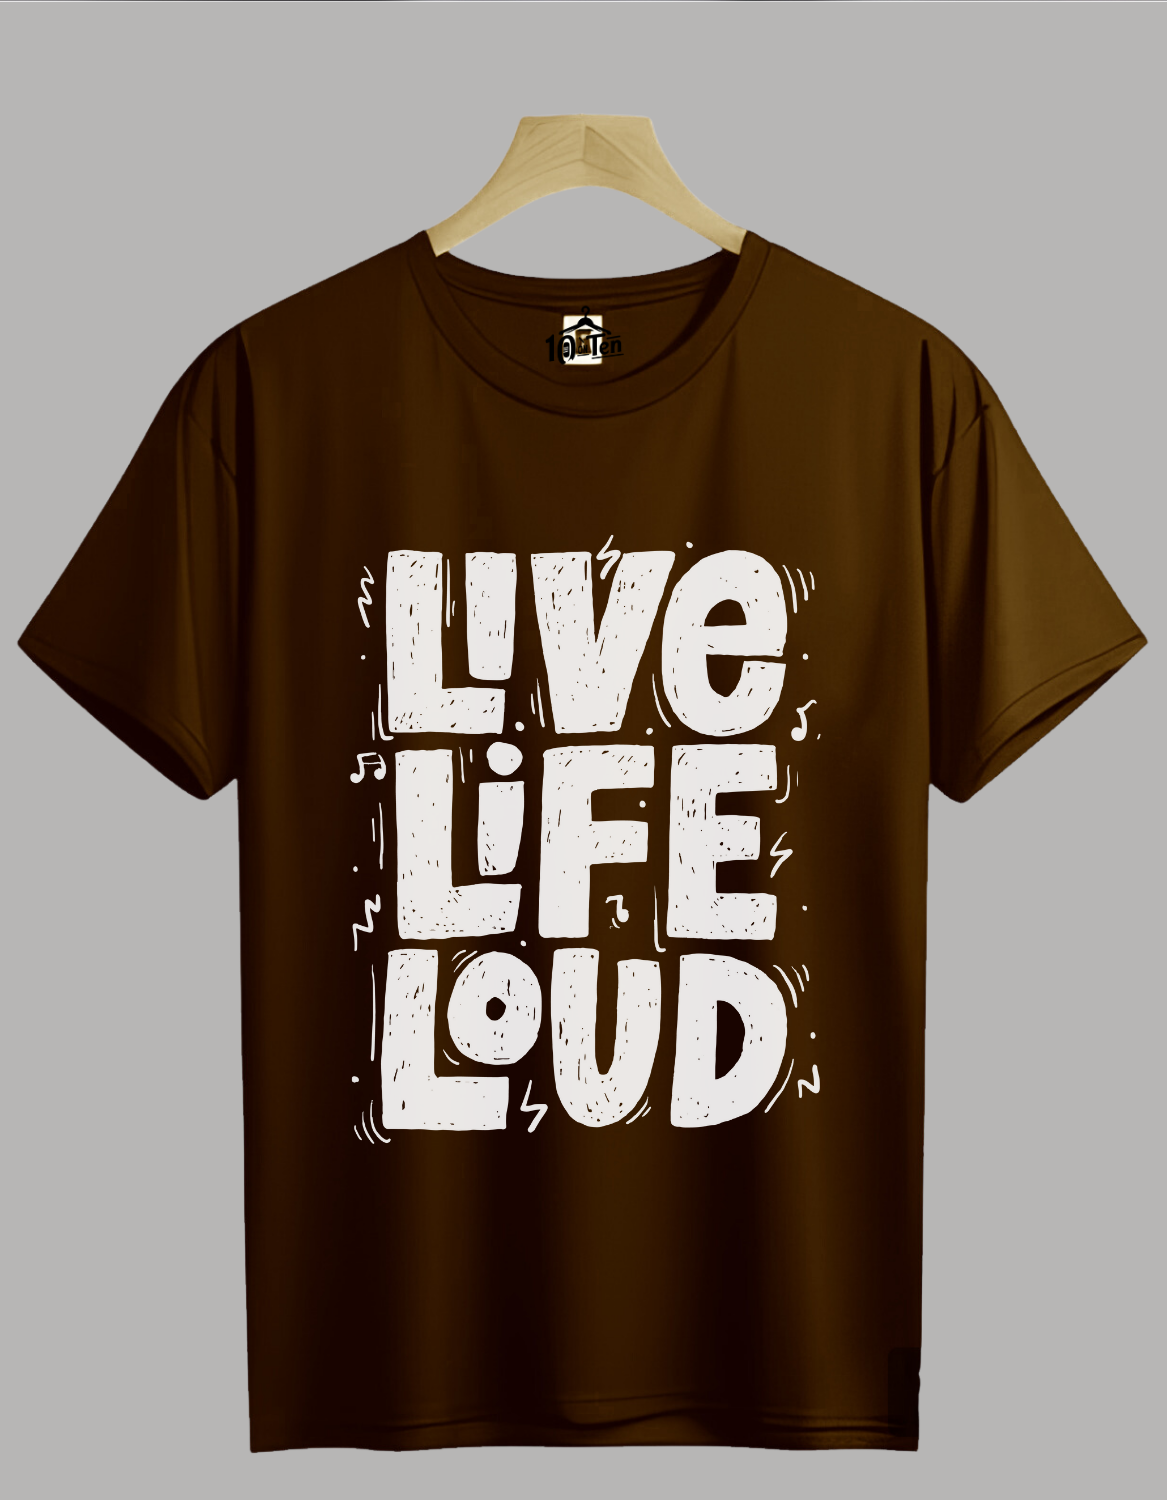 Live Life Loud Regular Fit T-shirt!